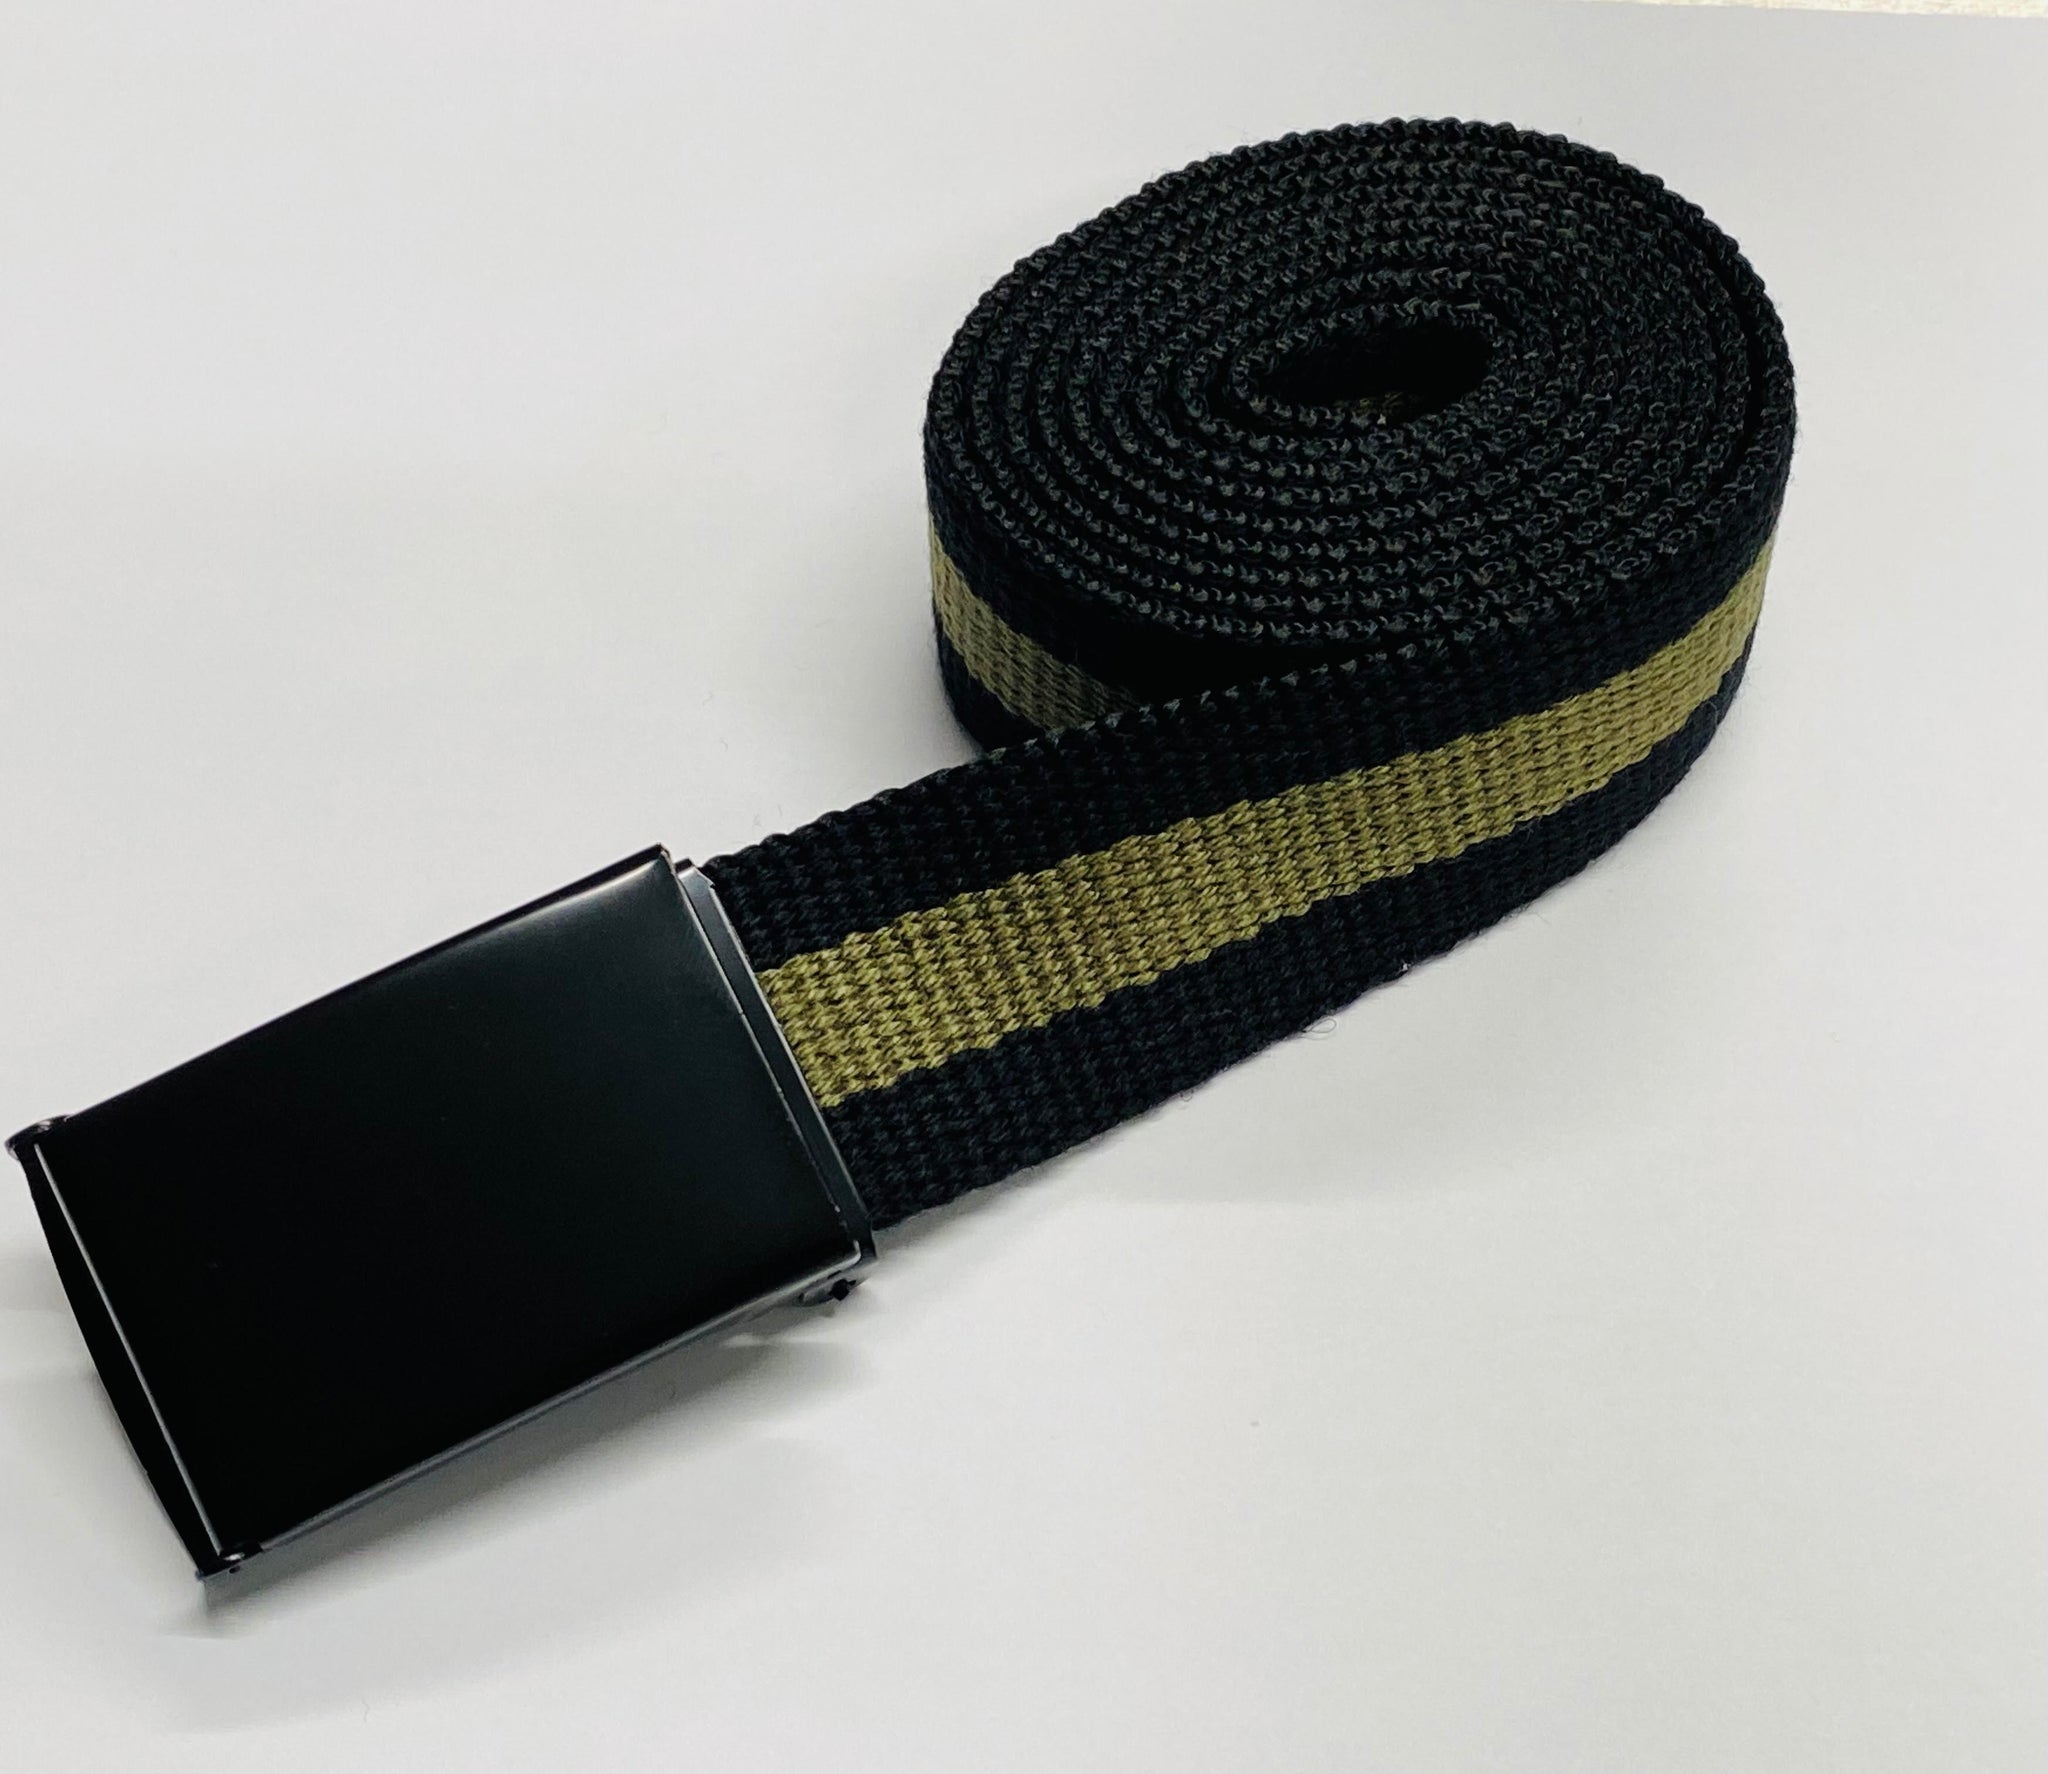 Black & Olive Green Striped 1.25" Web Belt w/ Buckle